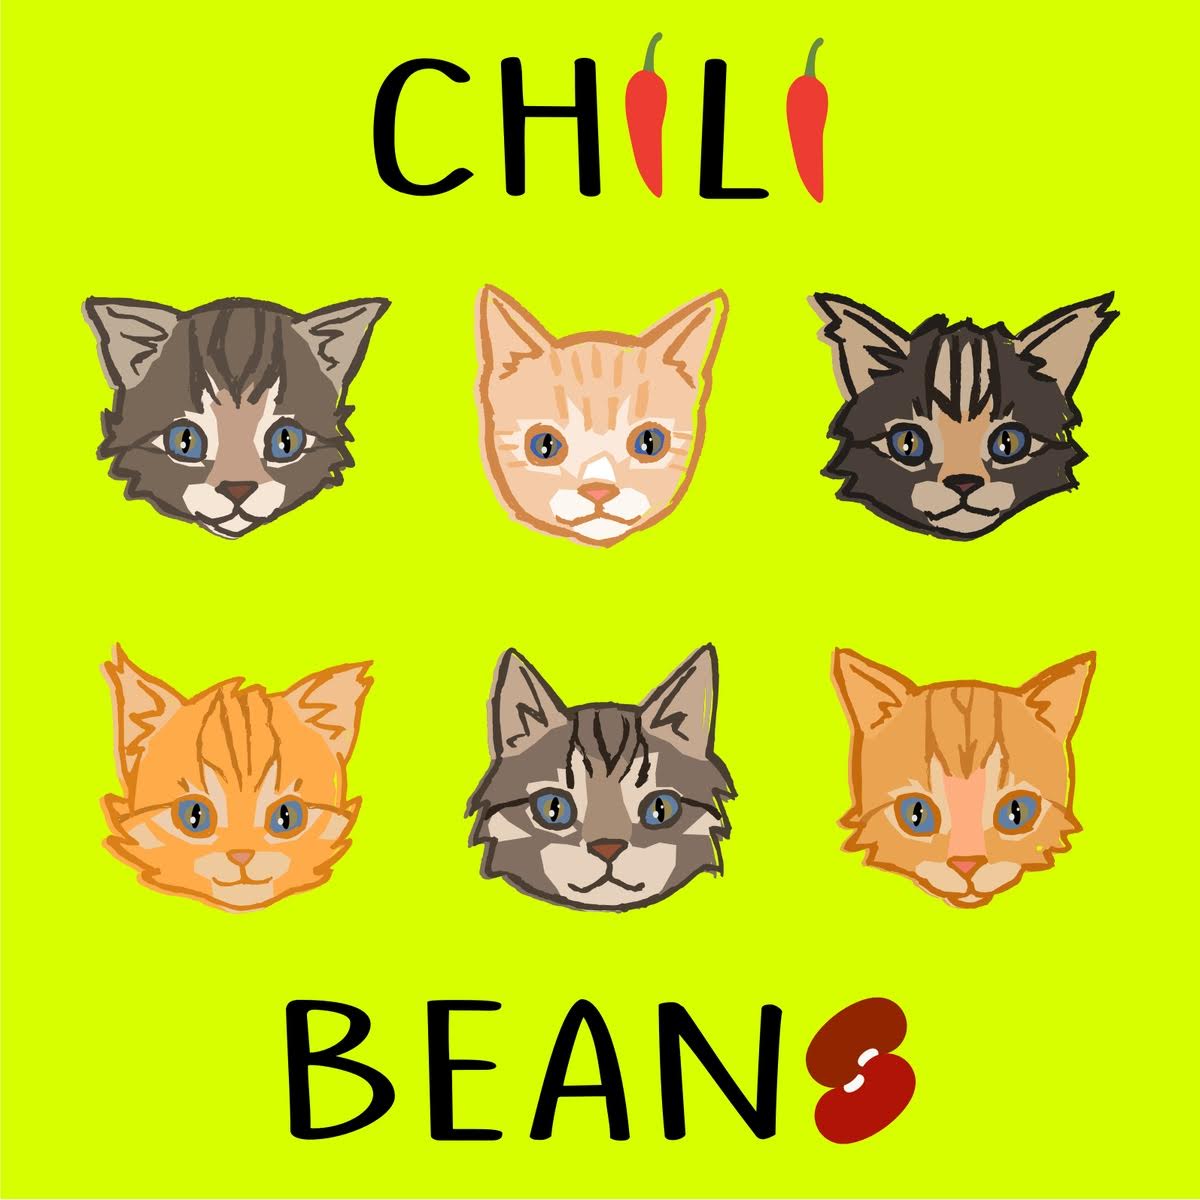 Chili Beans by StarMochaLatte